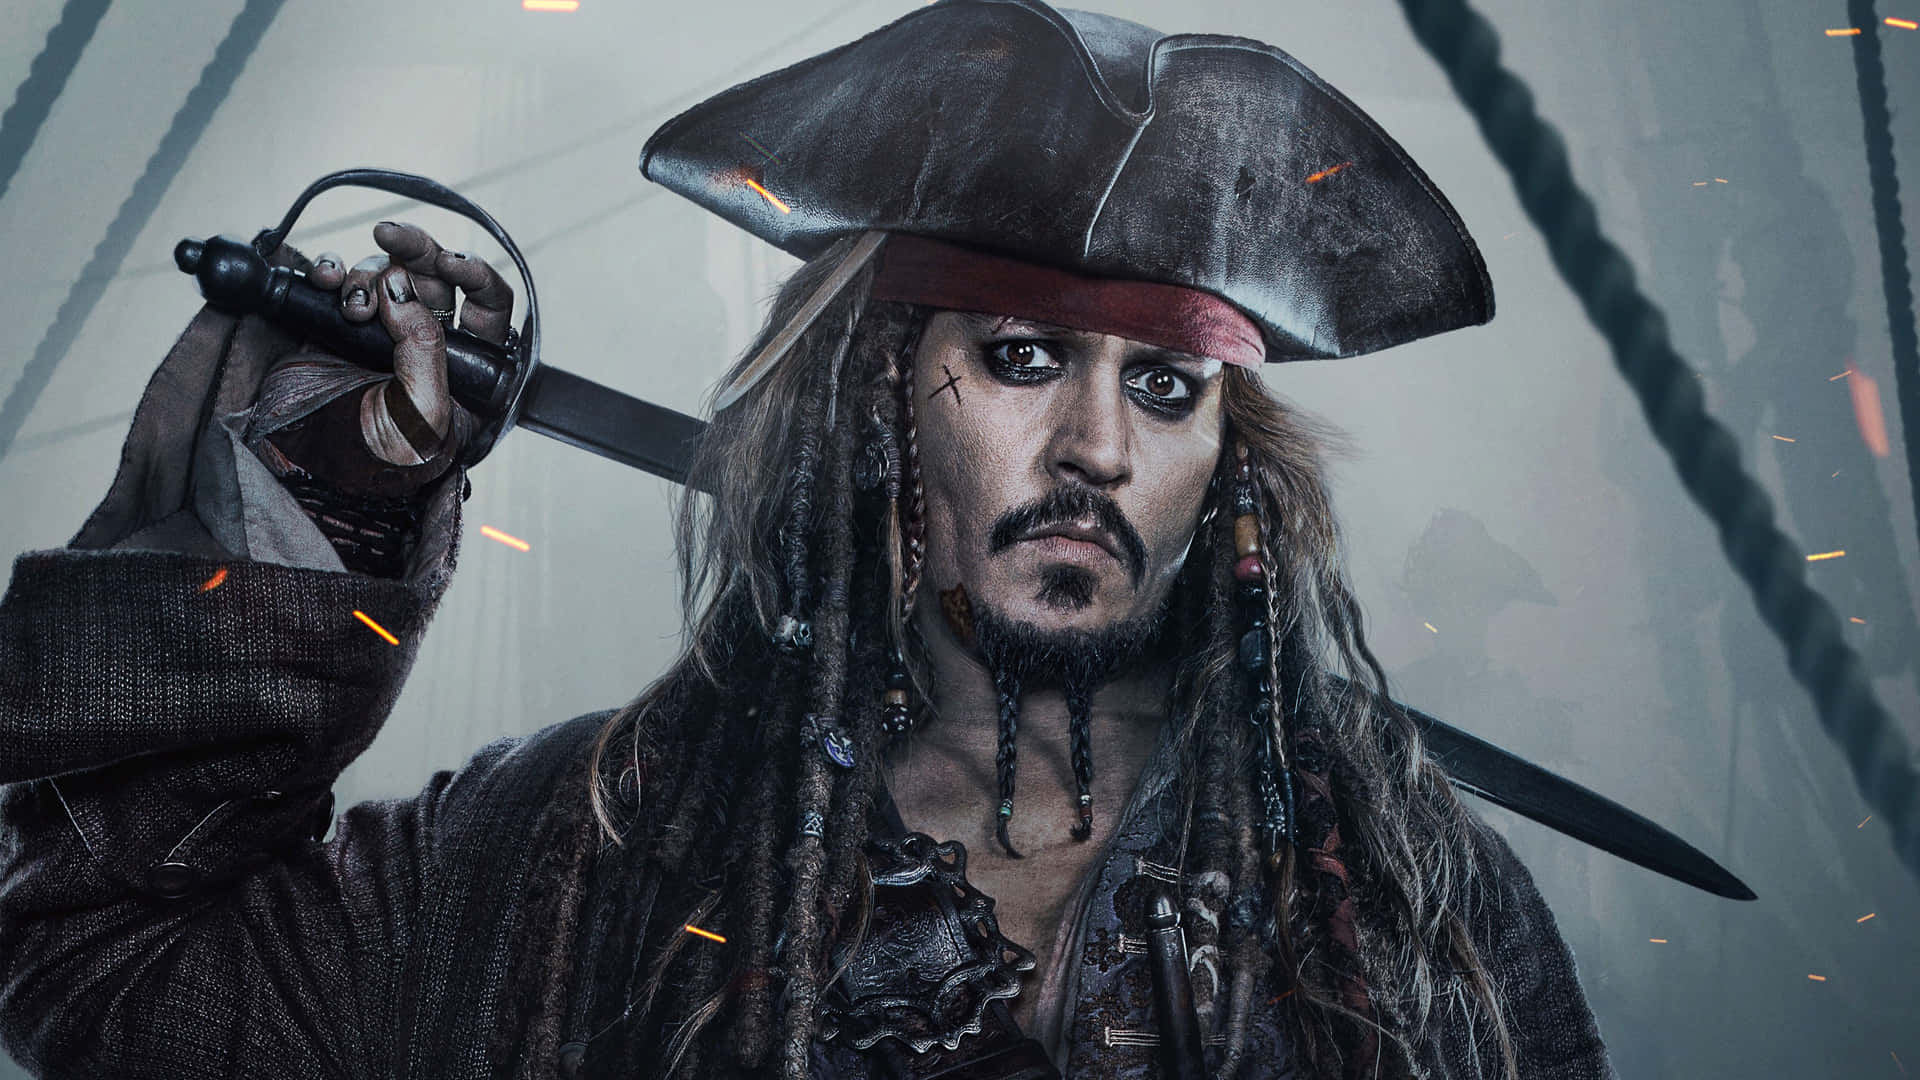 Captain Jack Sparrow navigating the treacherous seas in Pirates of the Caribbean